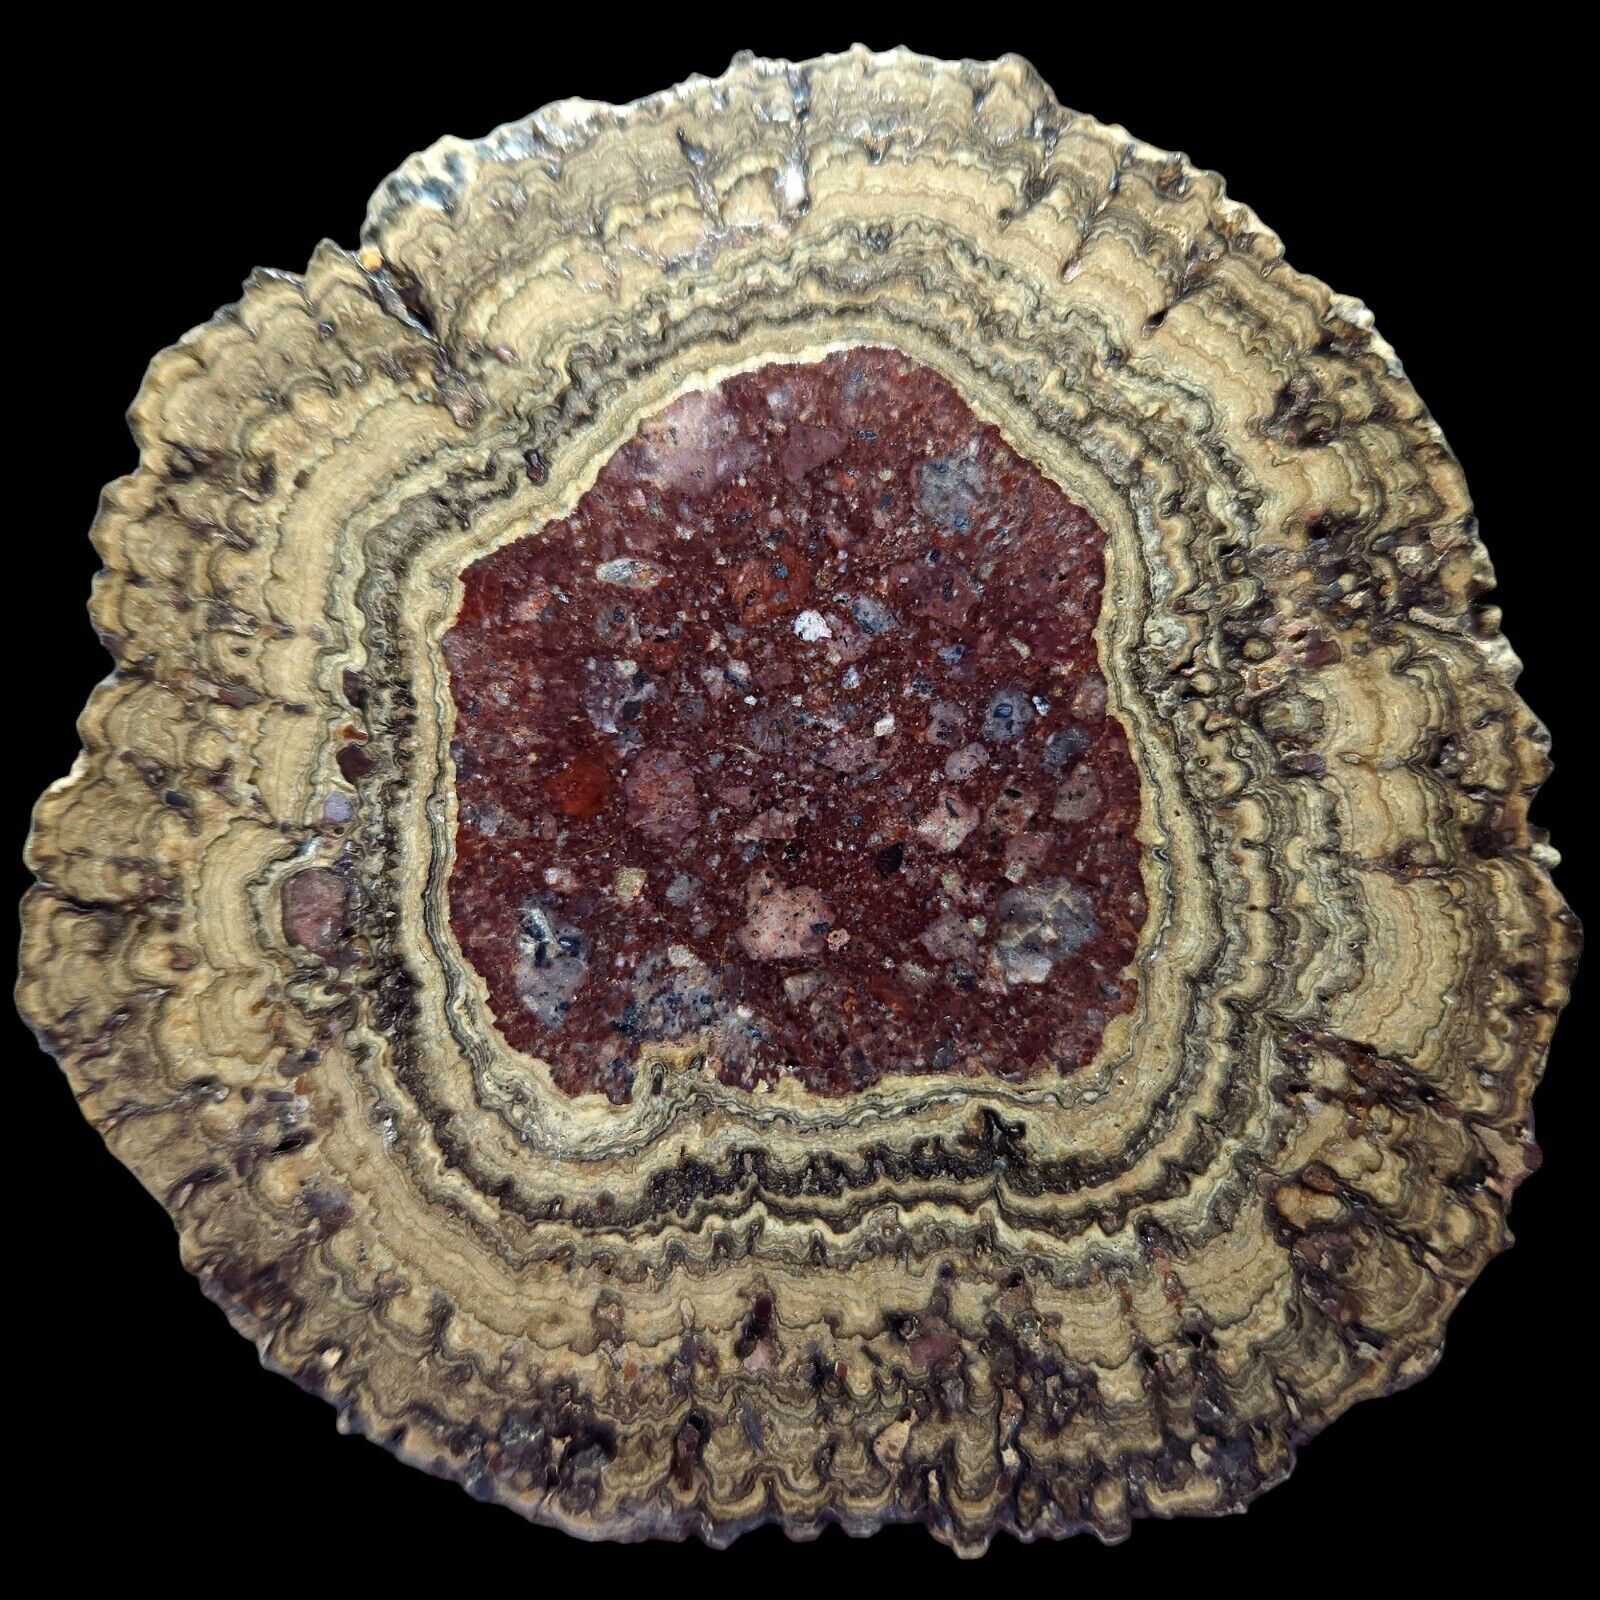 Polished Oncolite Stromatolite Microbialite Fossil, Cretaceous Age, Mexico, 131G